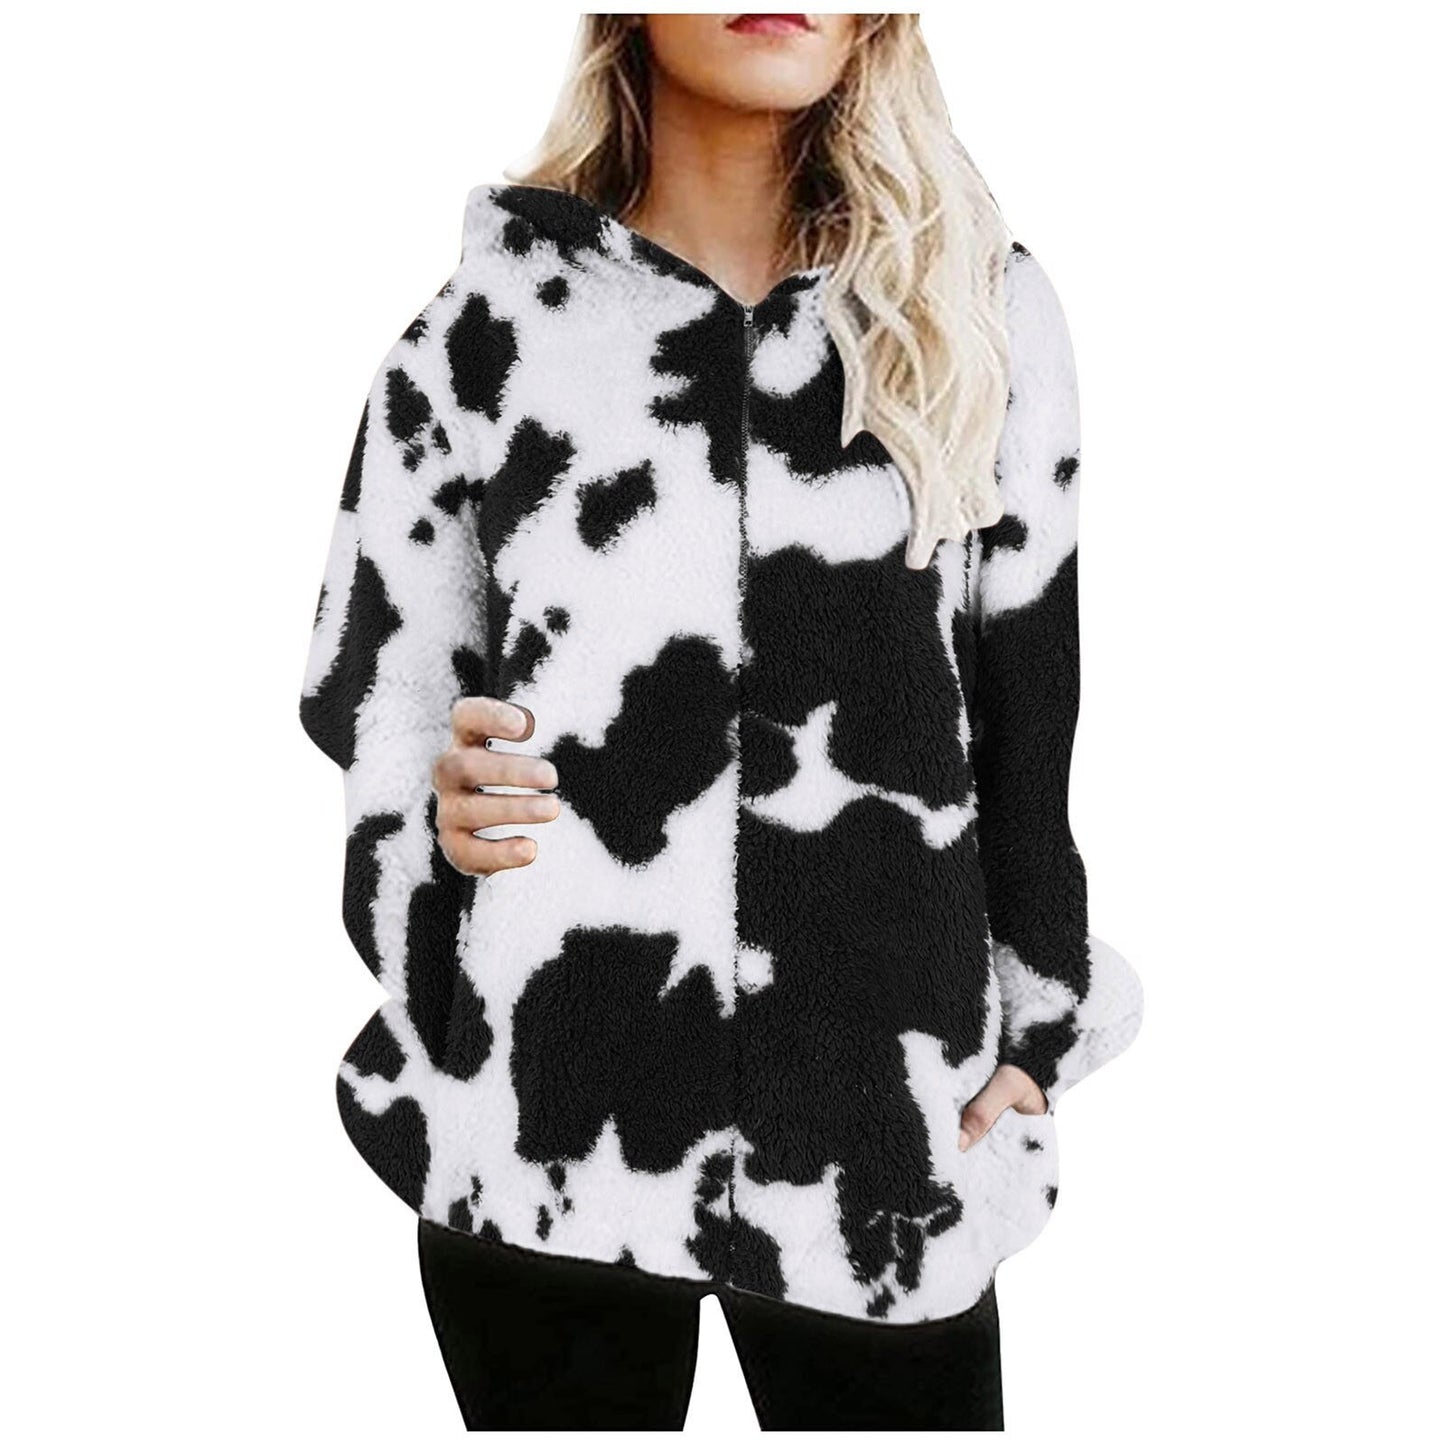 Cow Printing Women 2021 Winter Jackets Zipper Long-sleeved Sweatshirts Streetwear Cashmere Warmth Thick Coat Loose Hoodies